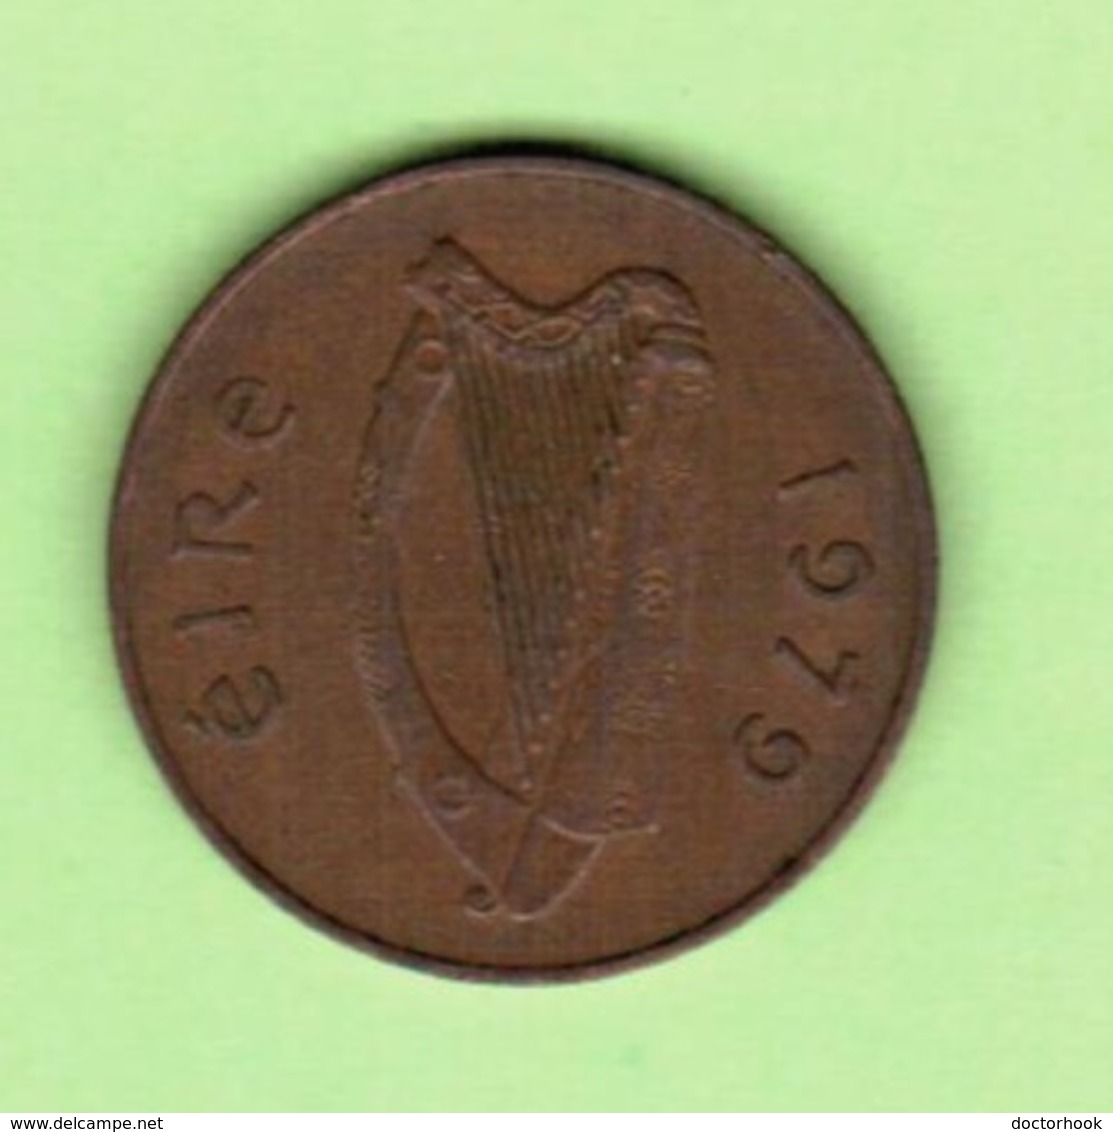 IRELAND   2 PENCE 1979  (KM # 21) #5212 - Ireland